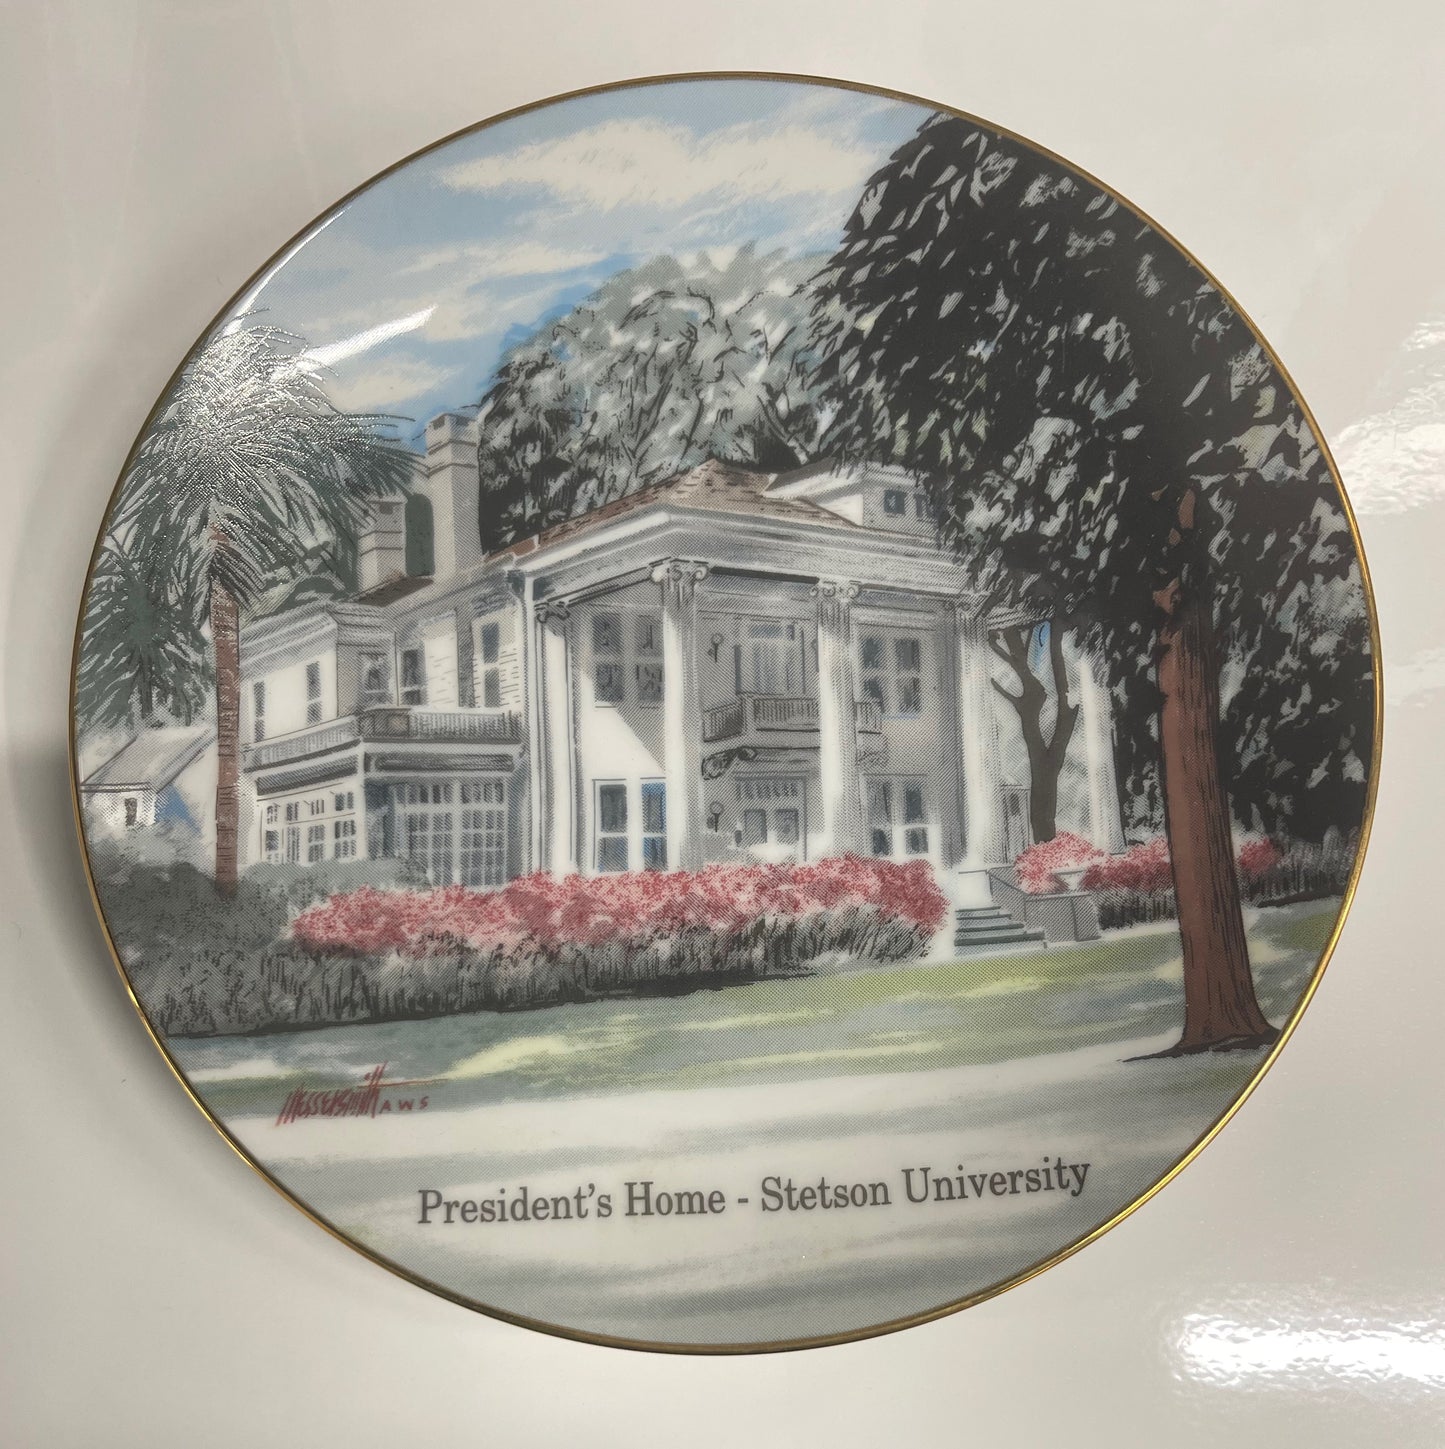 Stetson University 7 inch Plate - 4 - President's House 1991